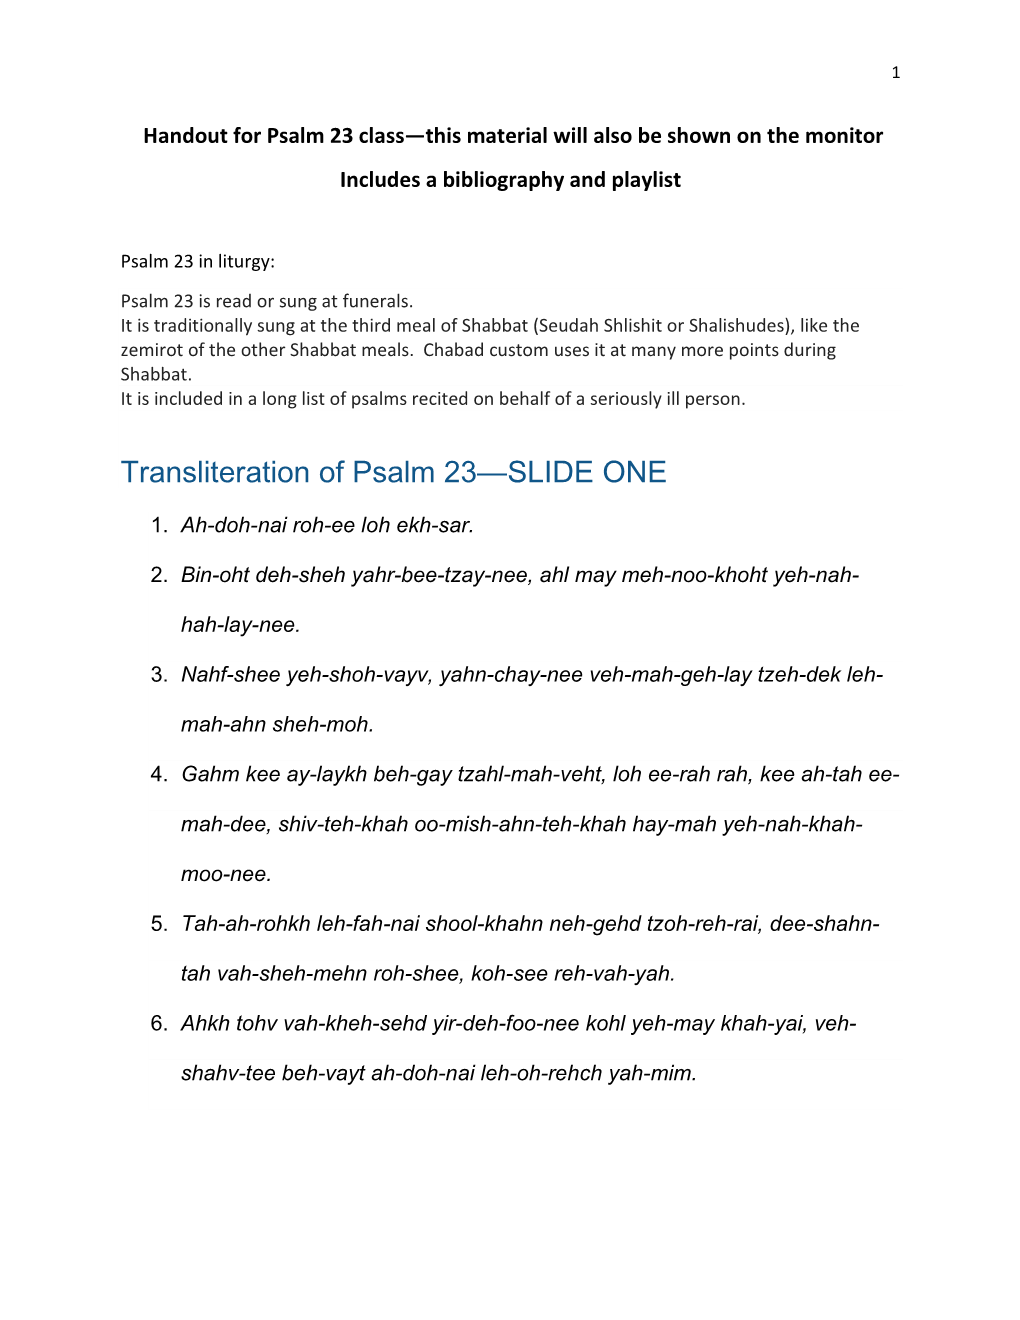 Transliteration of Psalm 23—SLIDE ONE